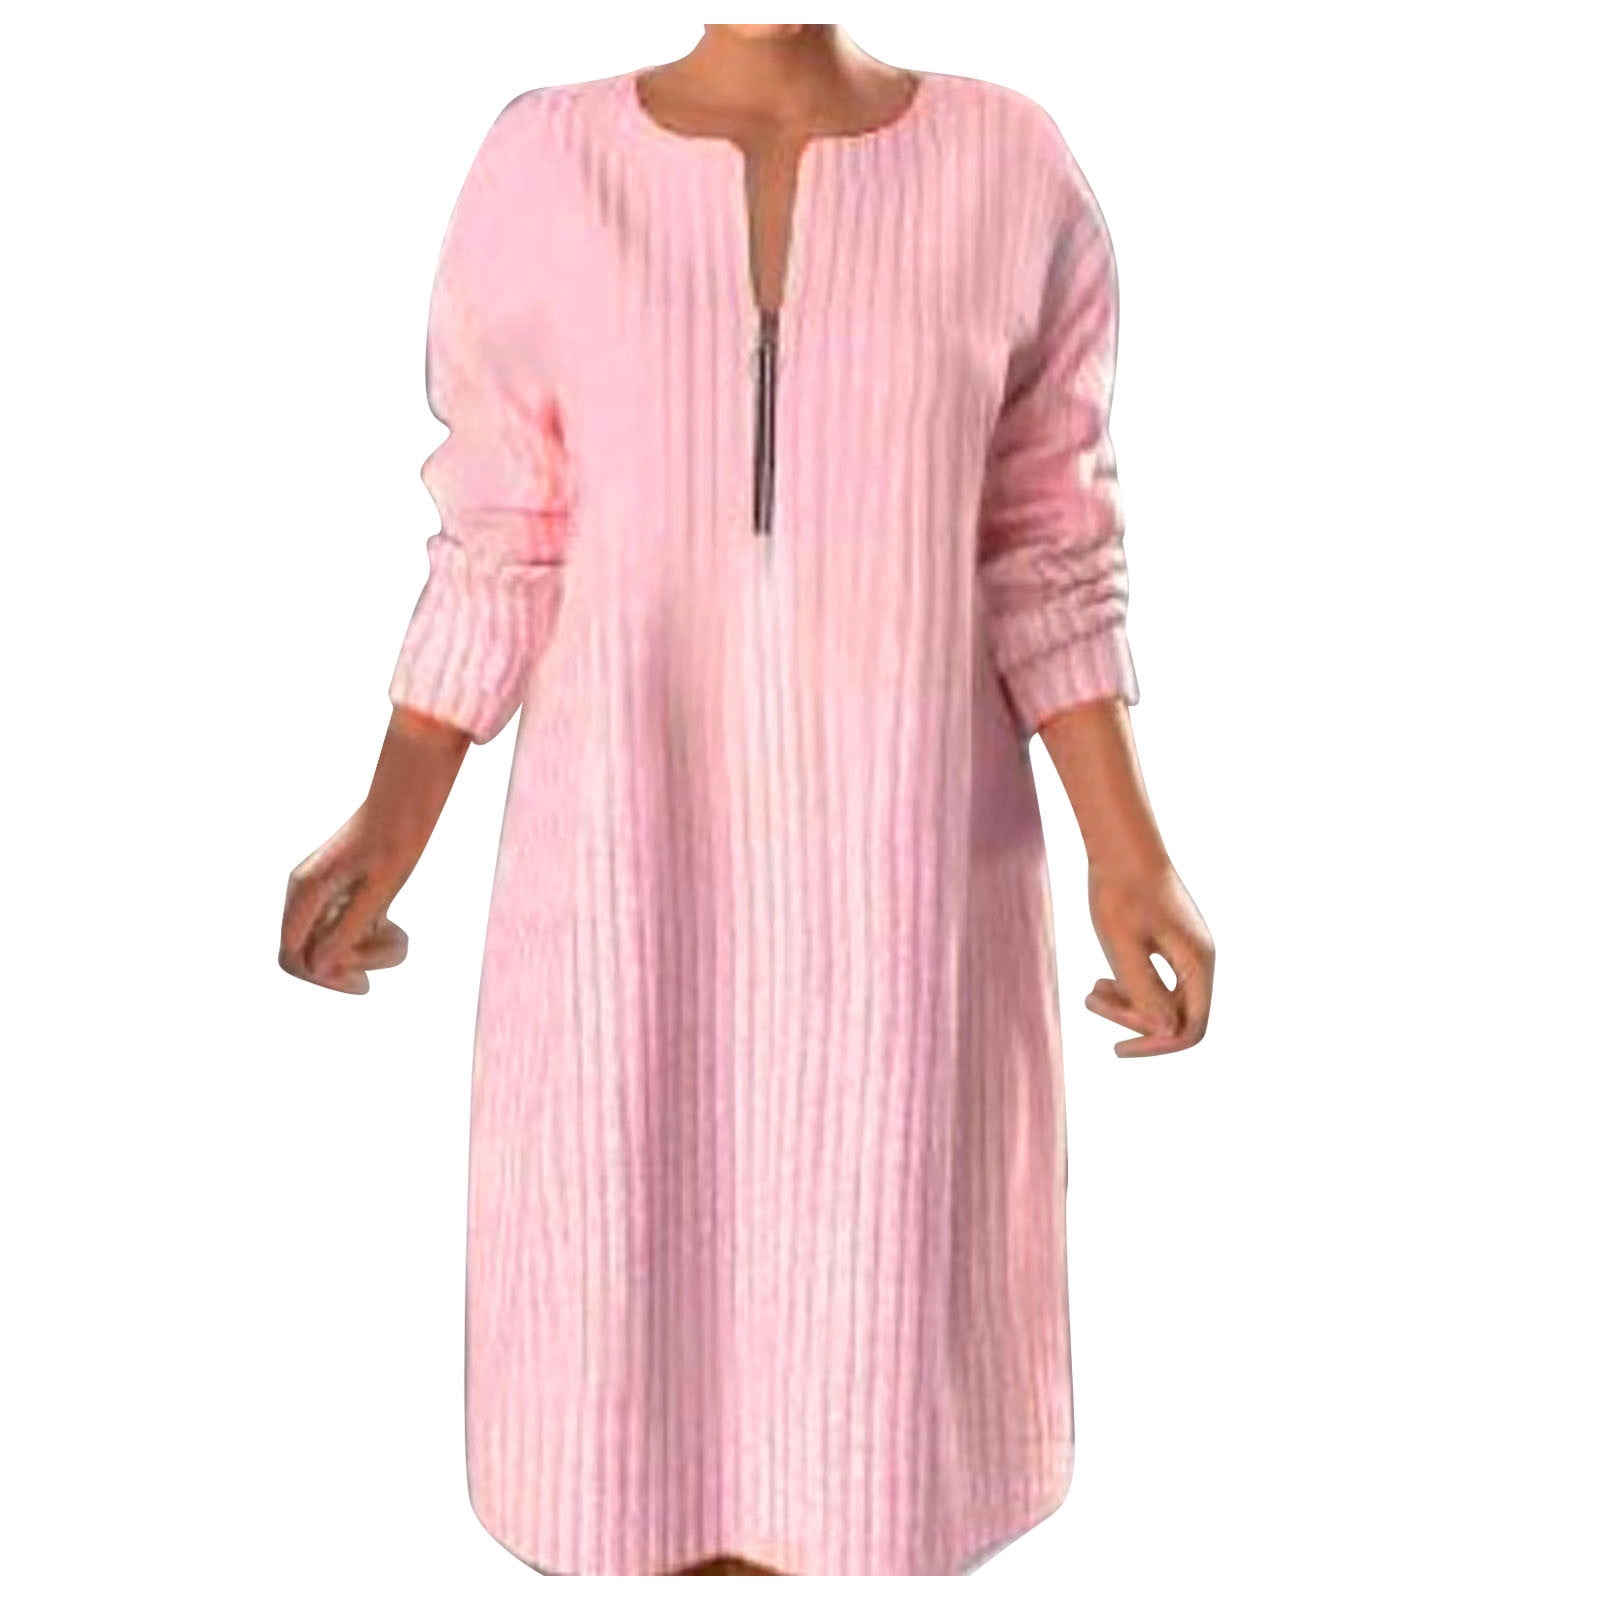 Whlbf Hot Pink Dress for Women Plus Size Long Sleeve Dress,Winter New ...